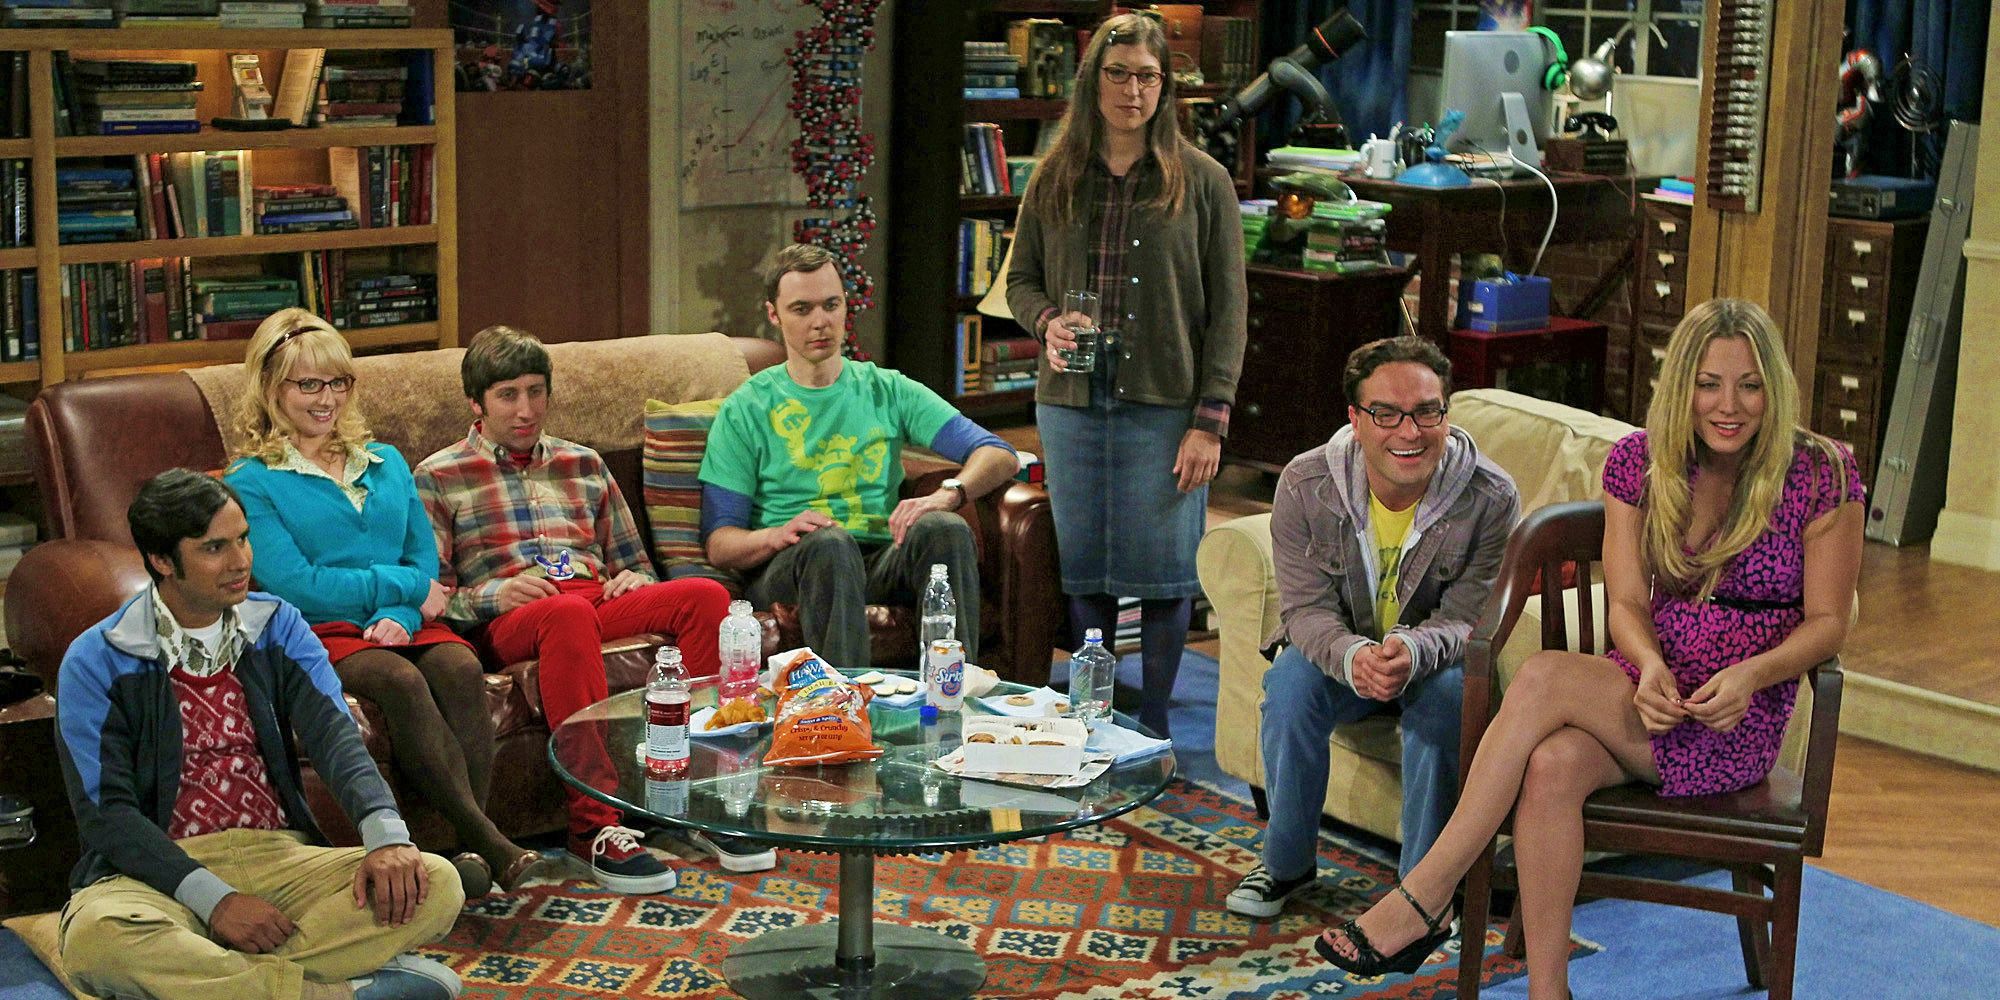 Big Bang Theory main cast gathered together